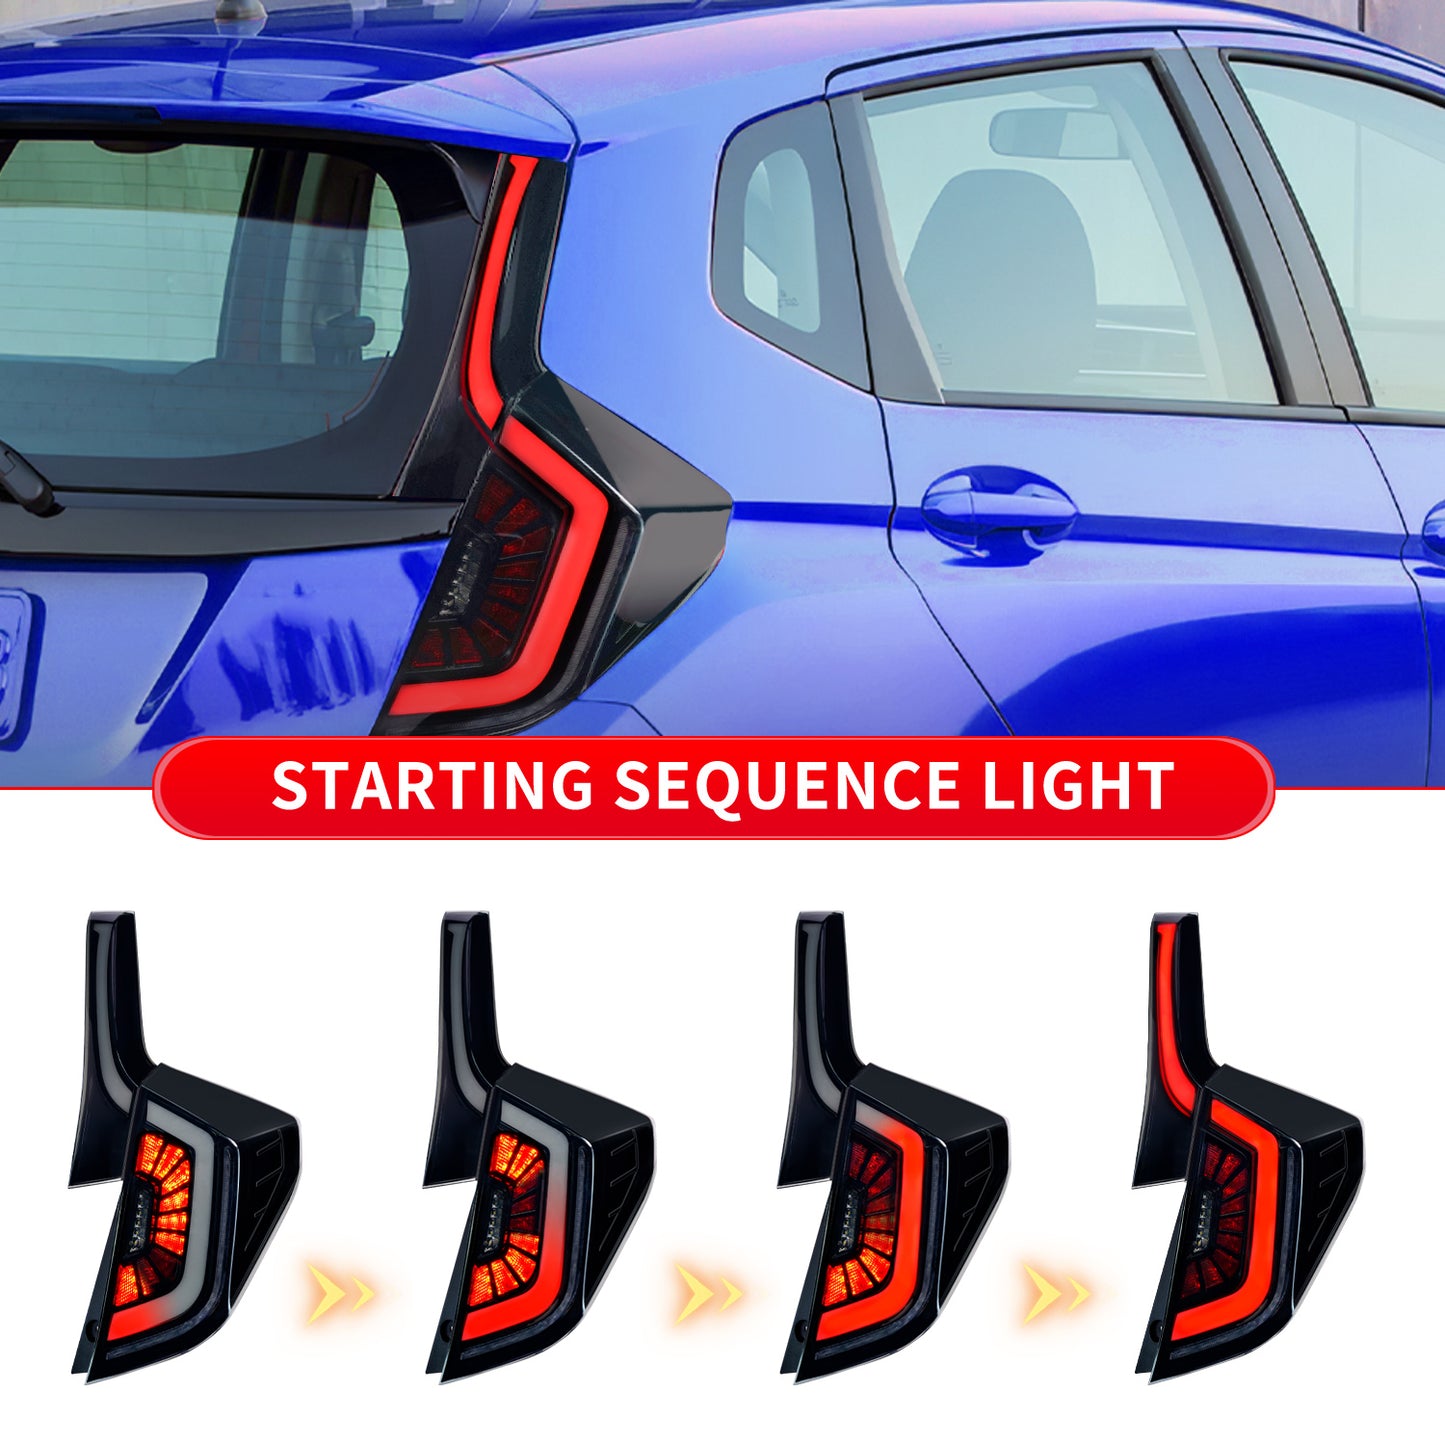 Full LED Tali Lights Assembly For Honda Fit/Jazz 2014-2020